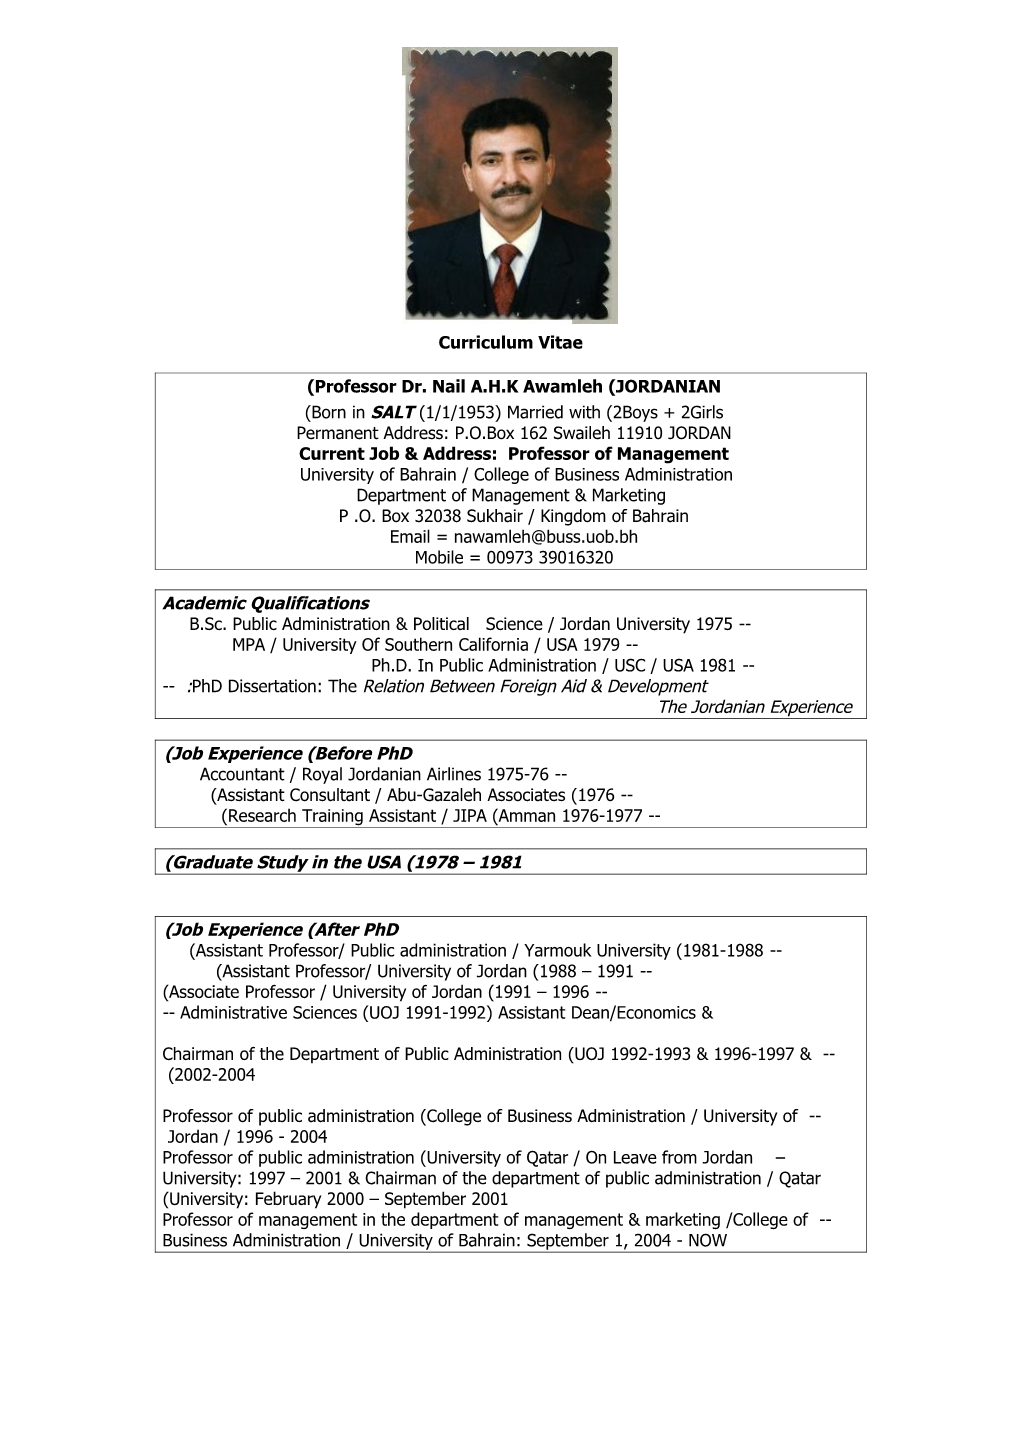 Professor Dr. Nail A.H.K Awamleh (JORDANIAN)